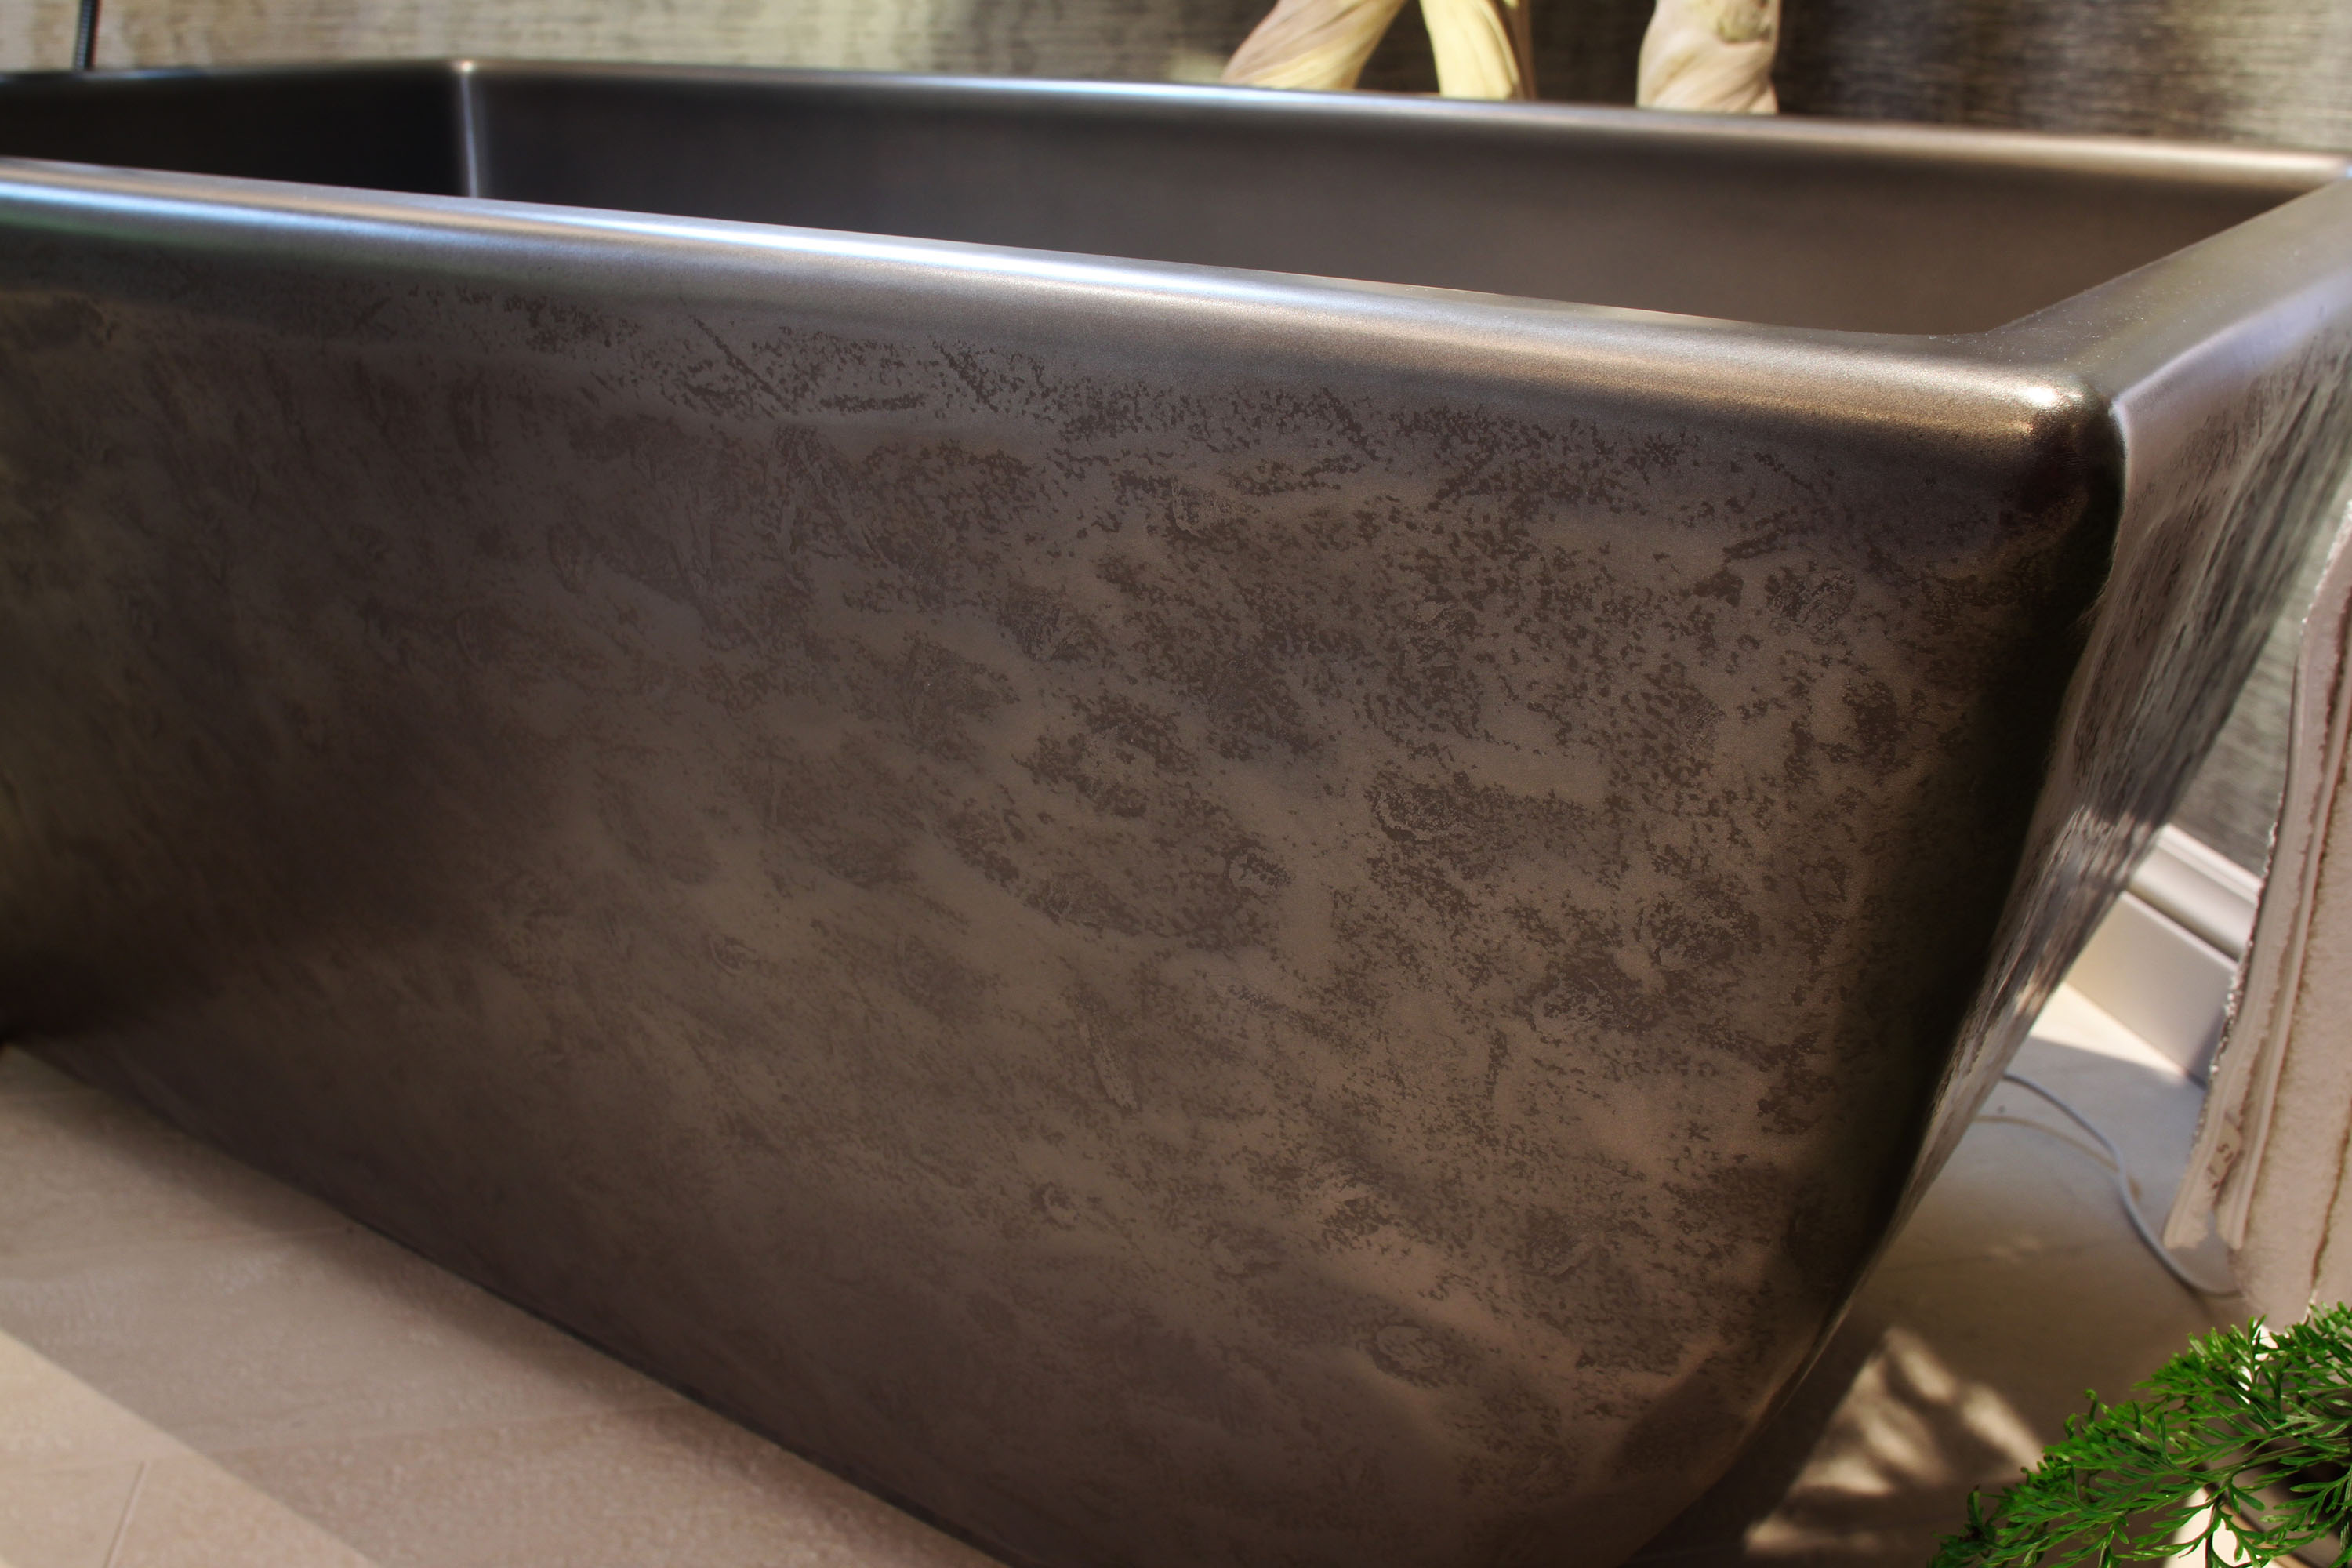 The Indulge Concrete Soaking Tub, MetalCrete Pewter Finish (Exterior Only)